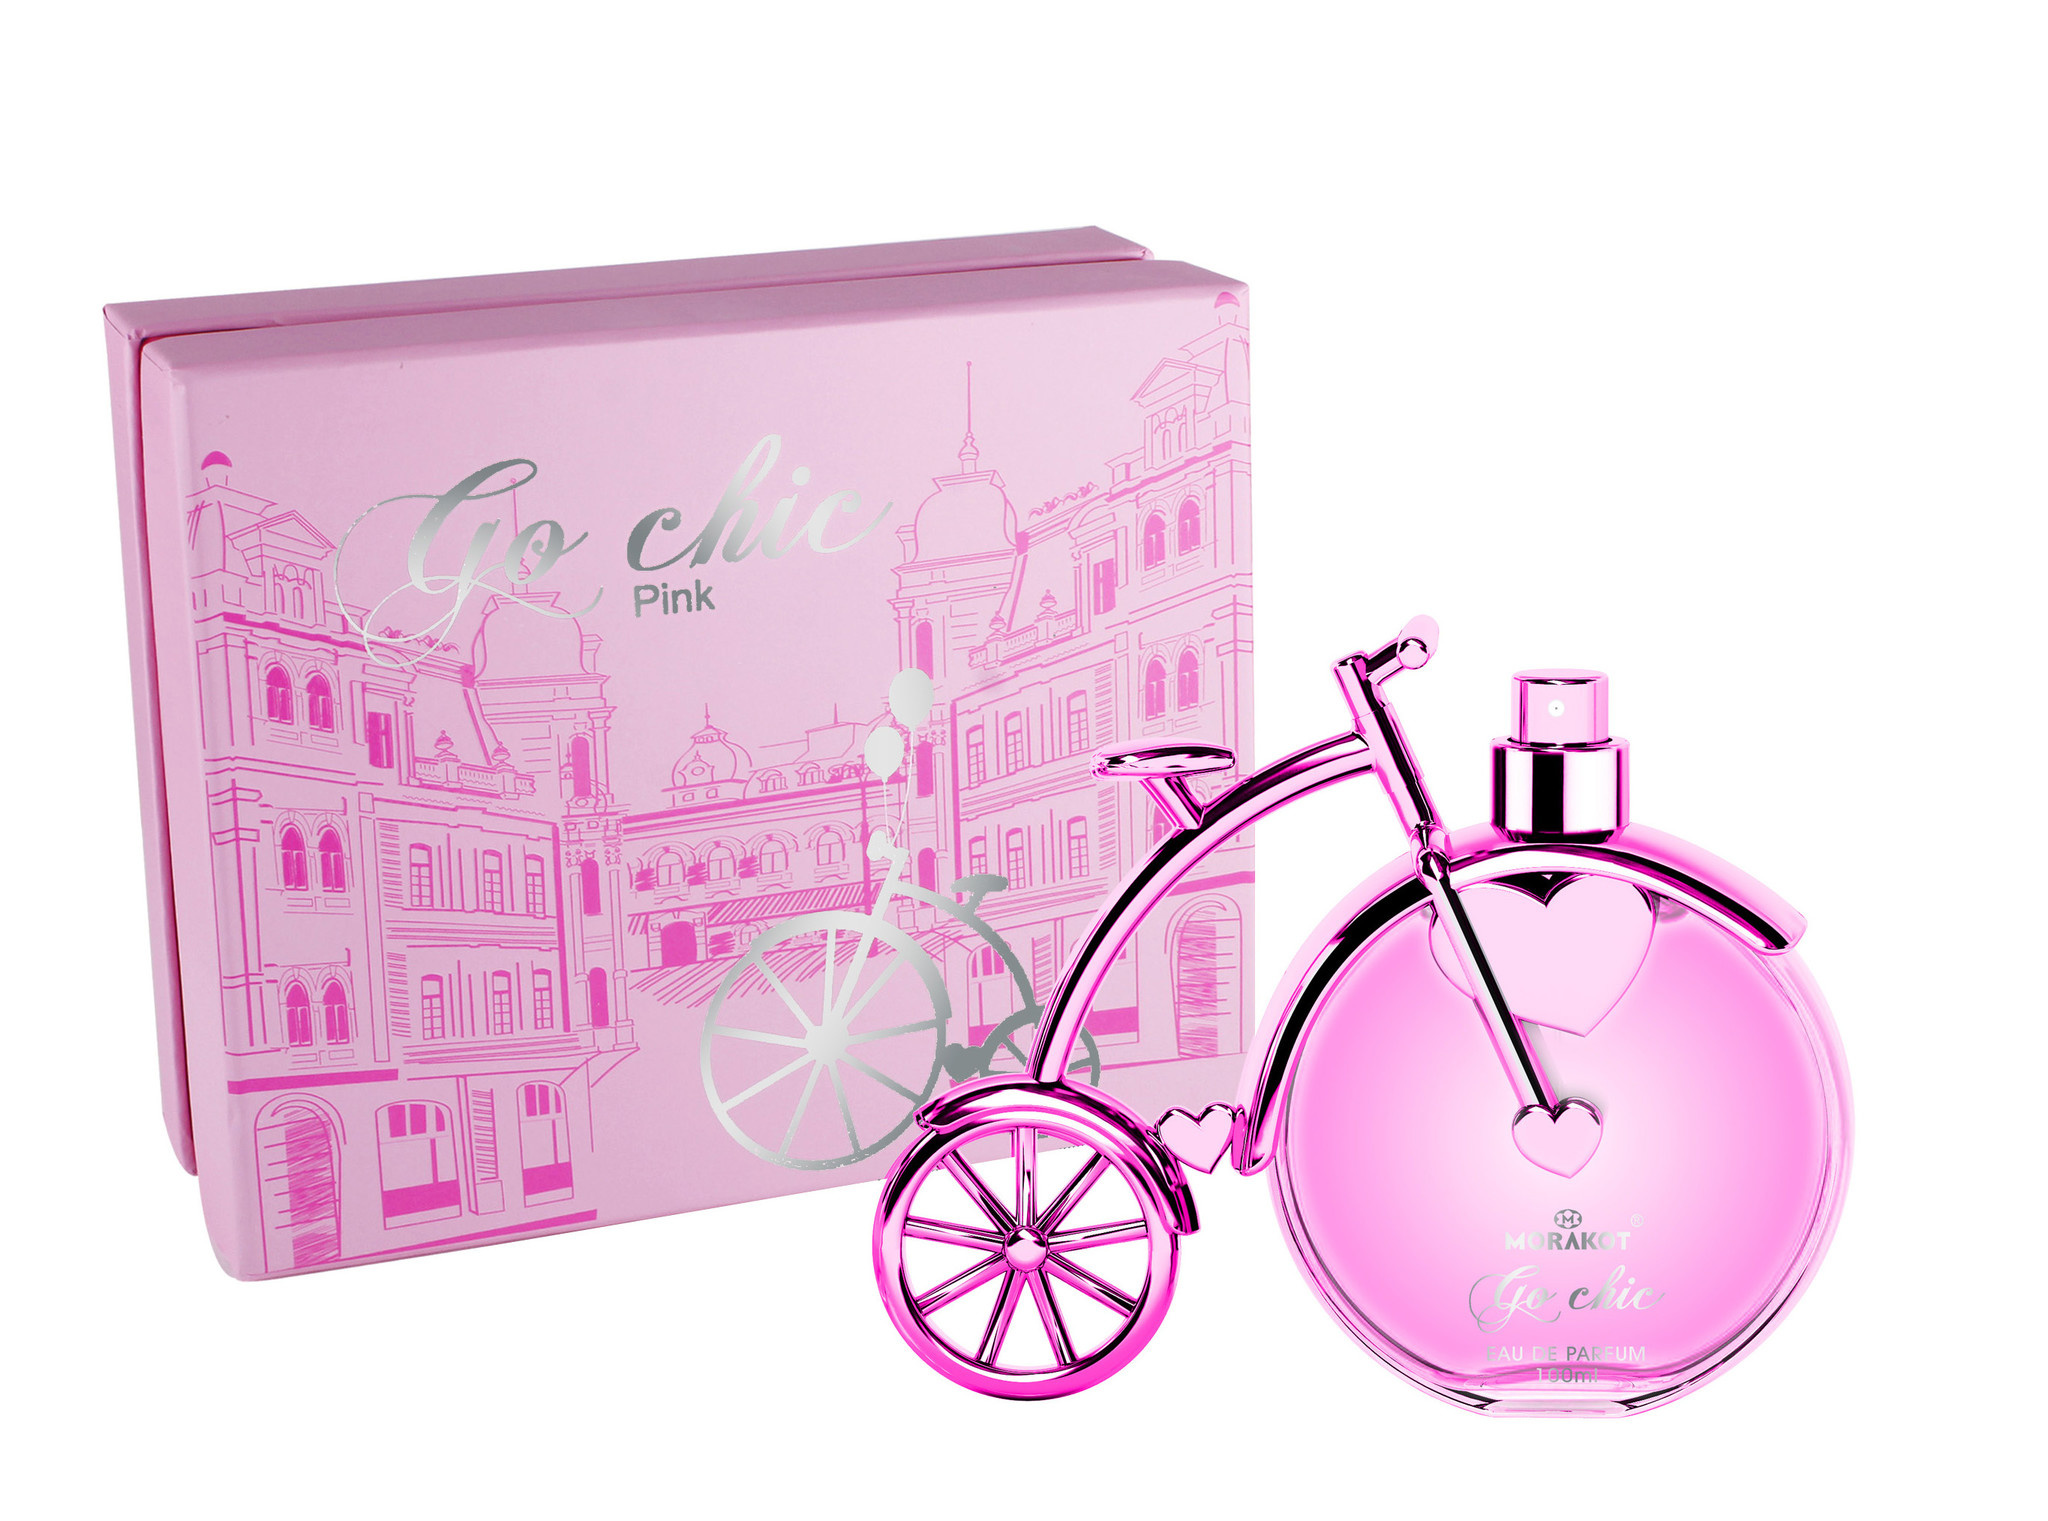 Tiverton Go chic pink EDP 100 ml - Euro parfums